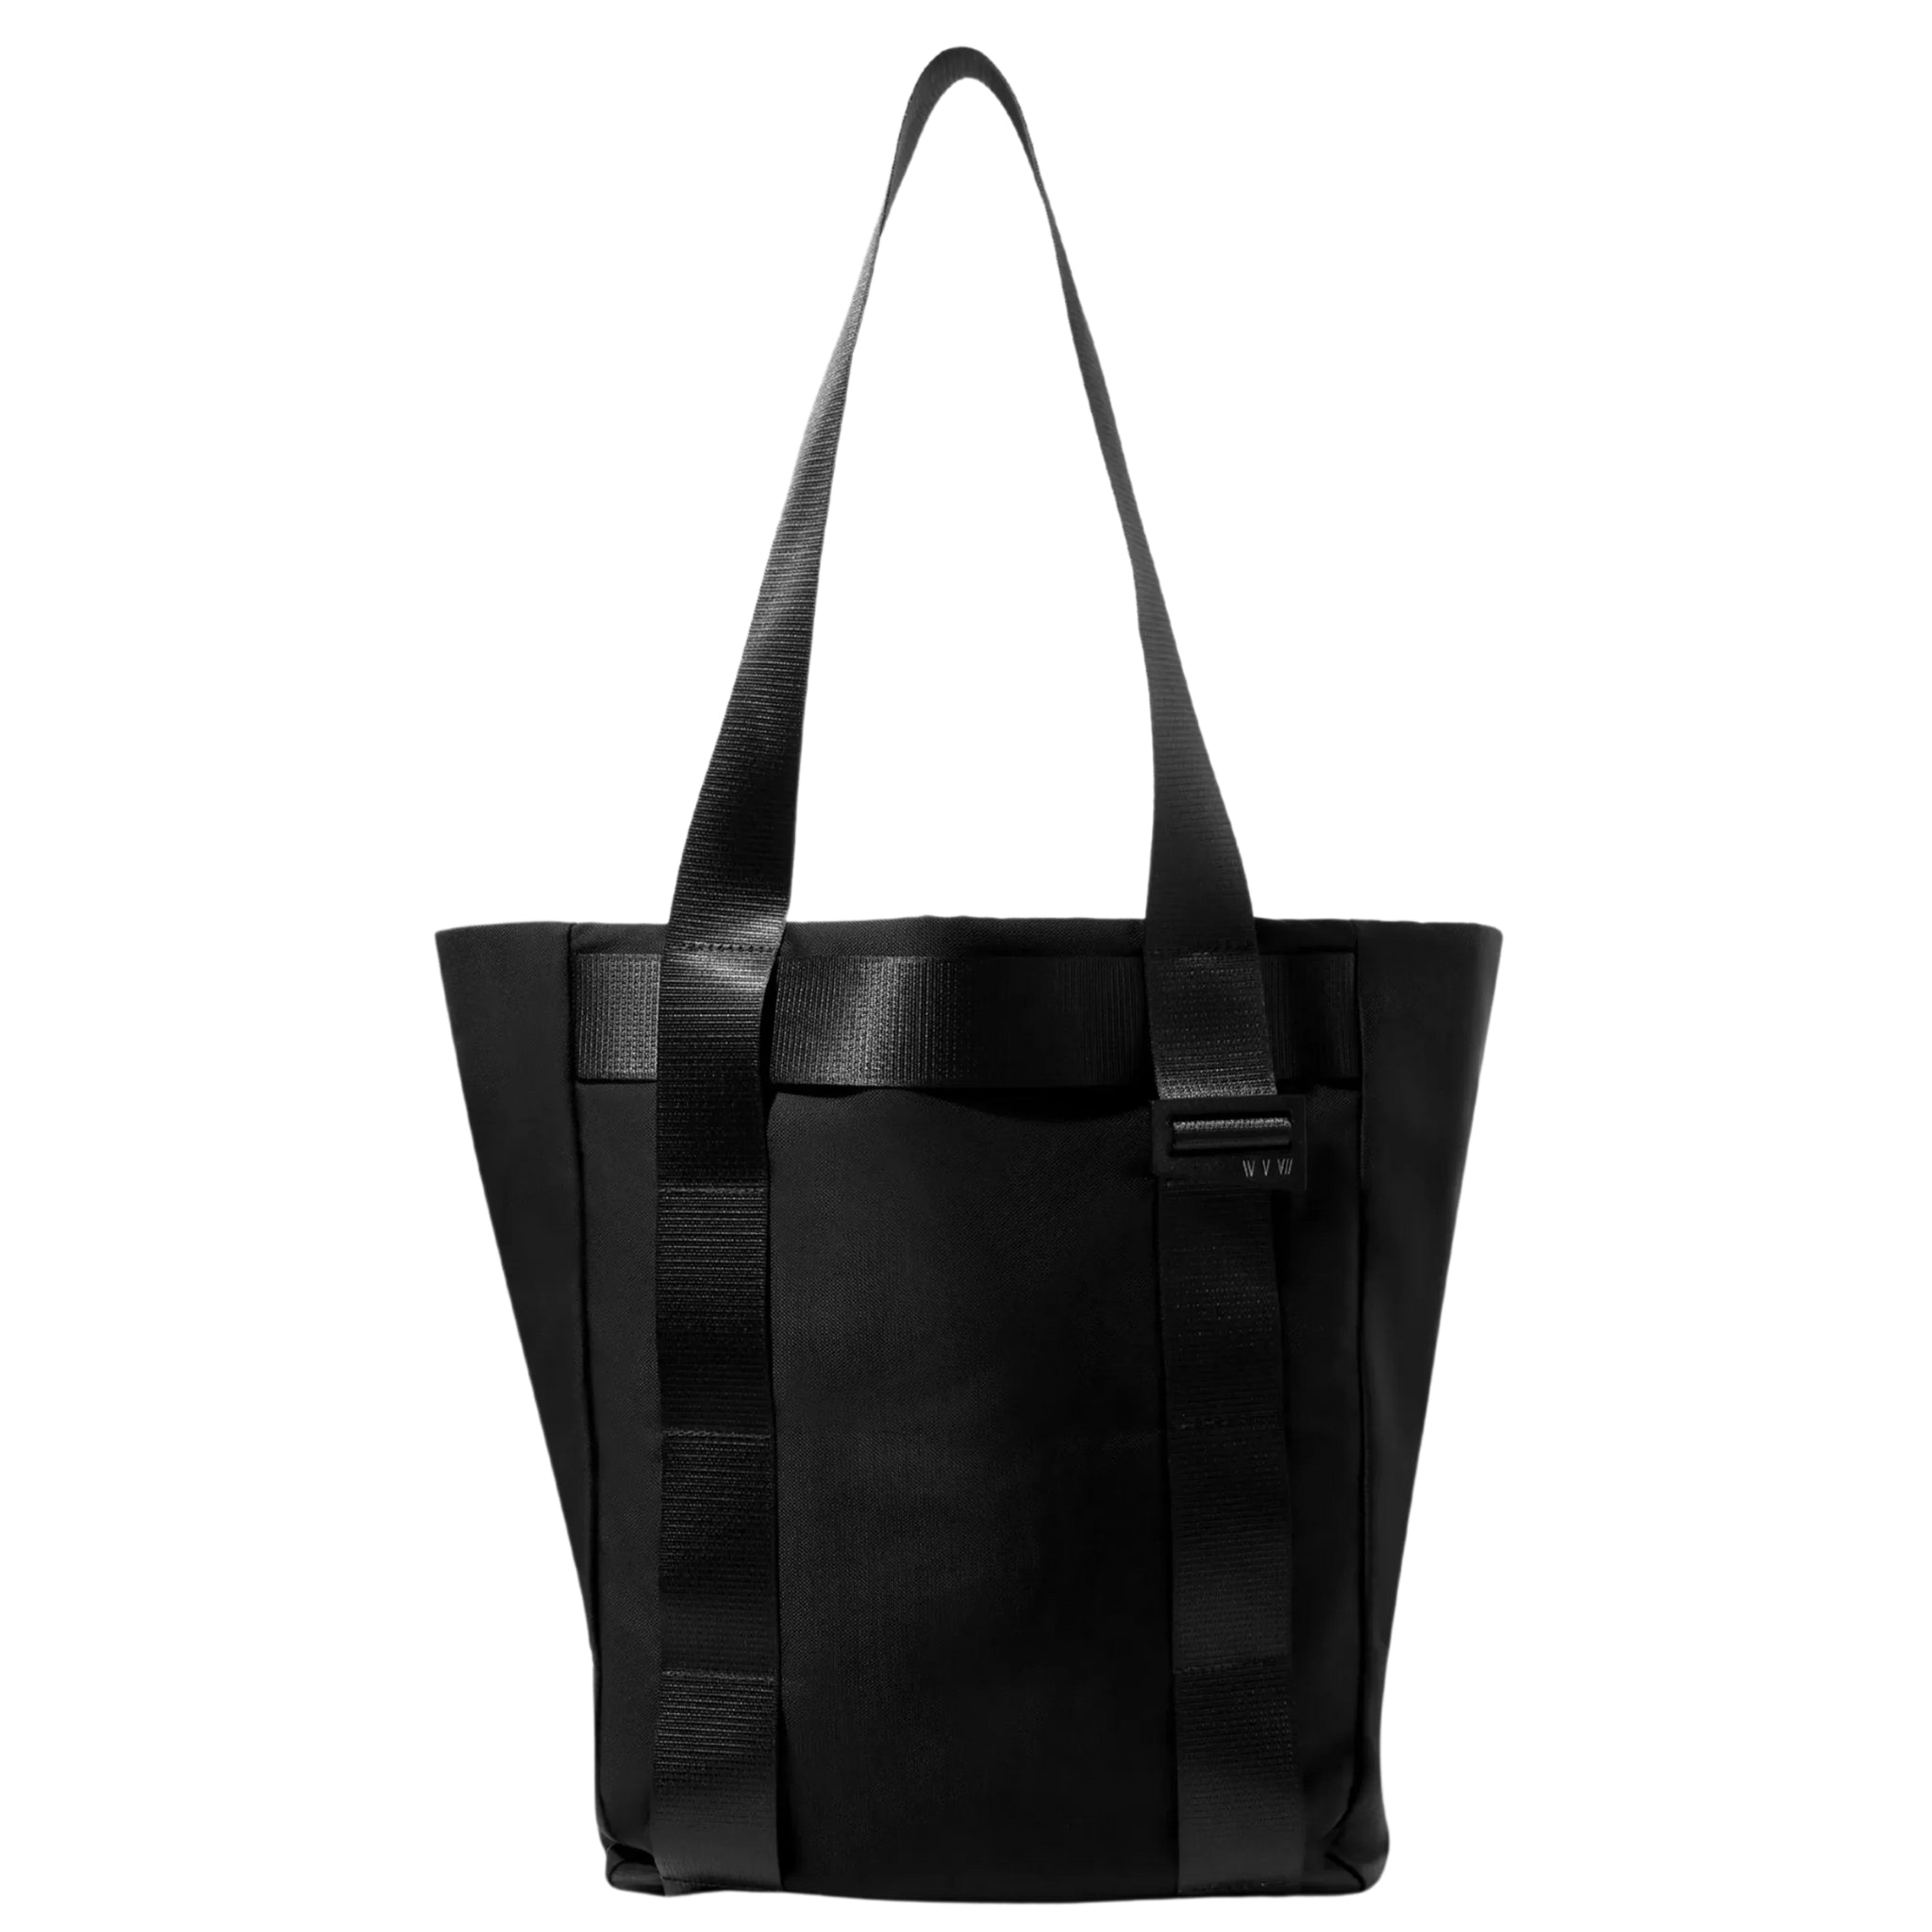 Medium sized Black tote bag, utilitarian style. On a white background.